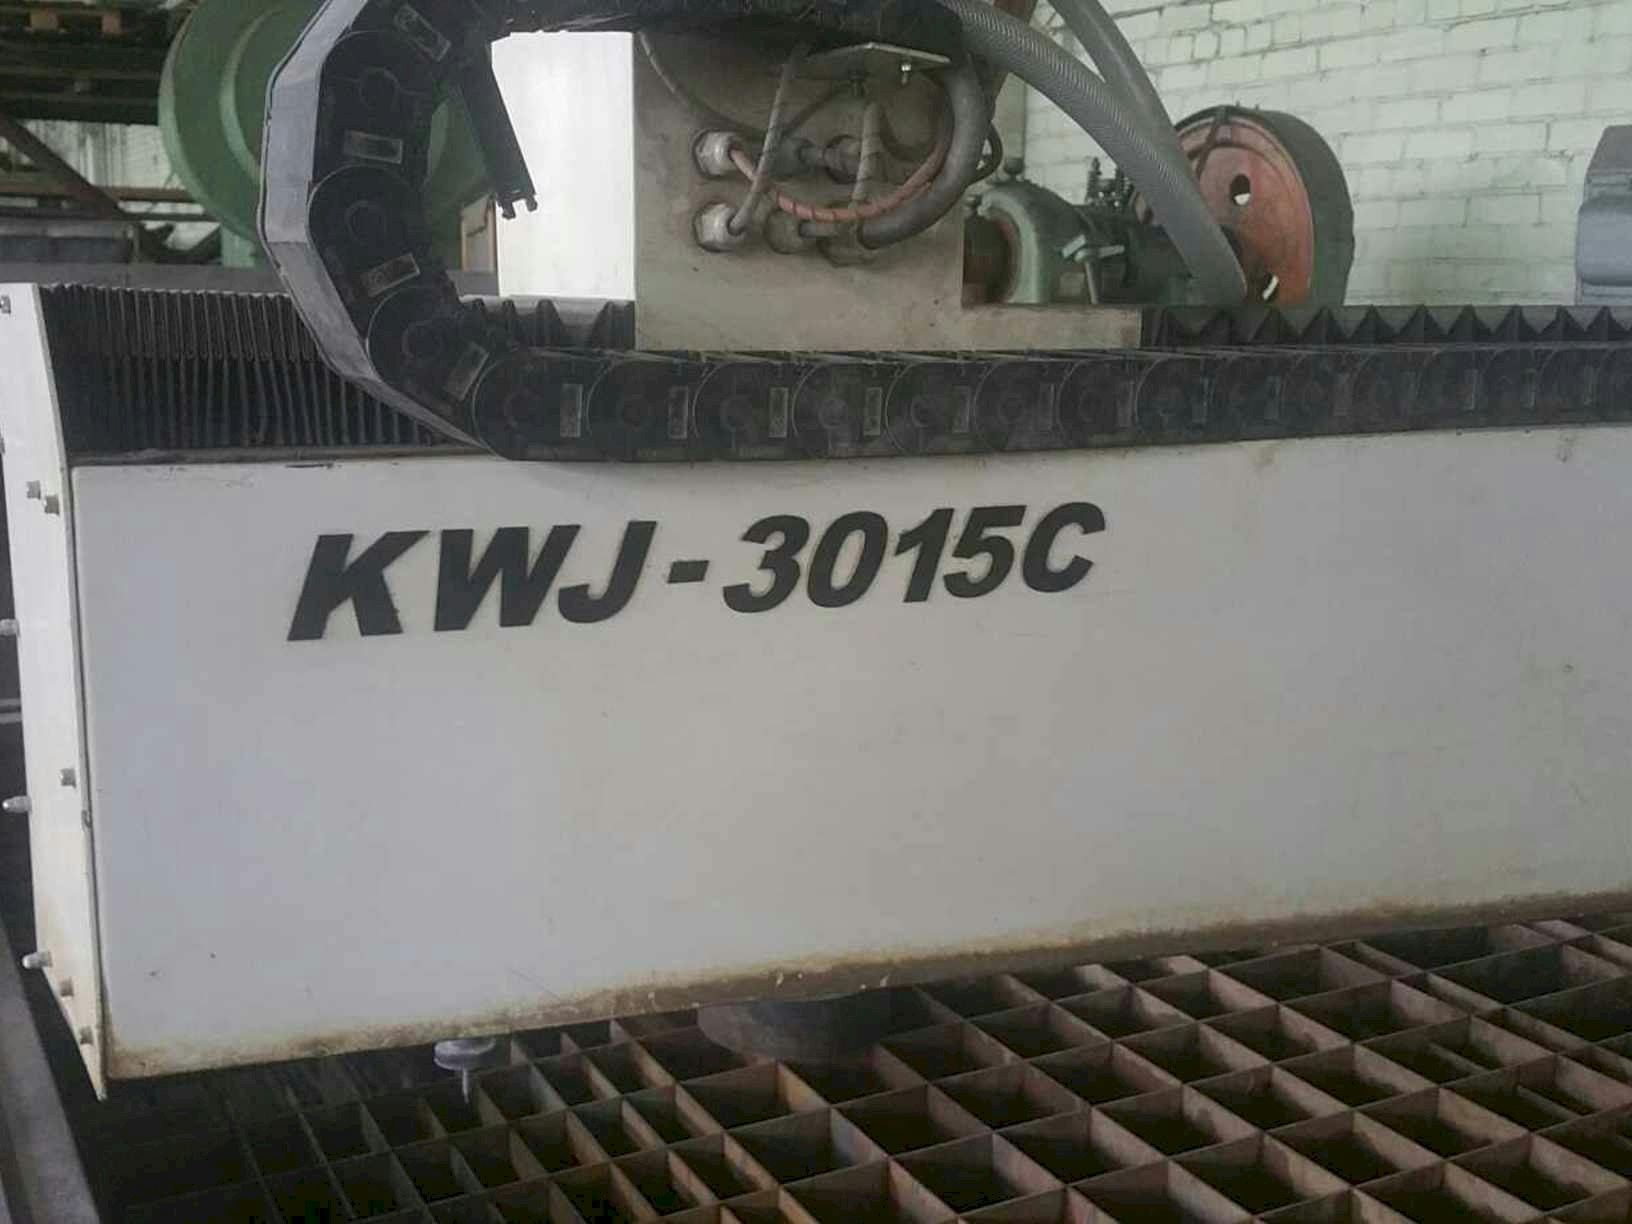 Frontansicht der Kenner KWJ 3020 C KMT Streamline SL-V 30  Maschine